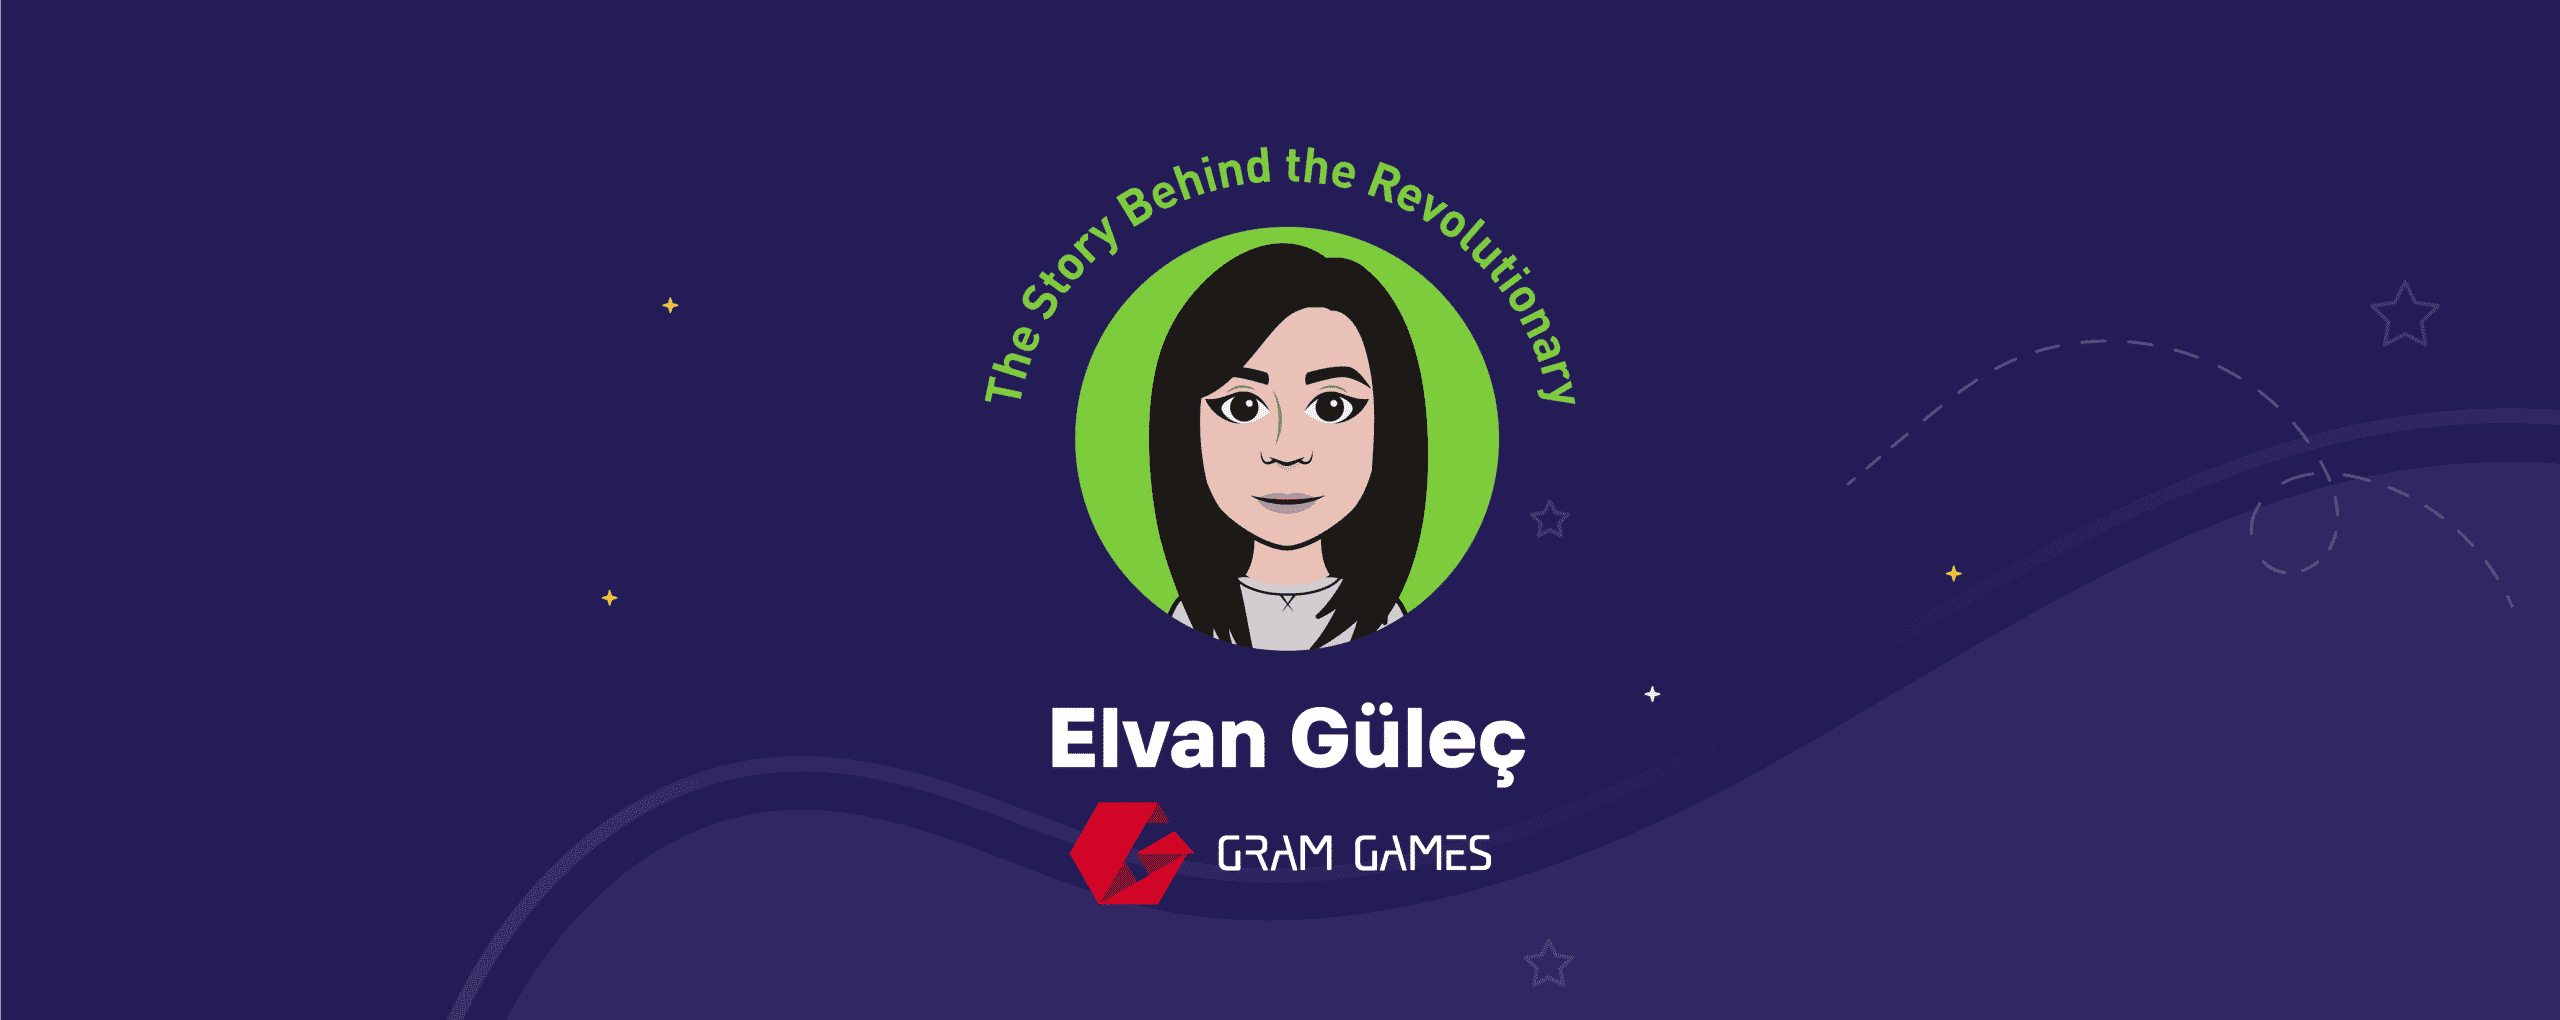 Mobile Revolutionary: Elvan Güleç